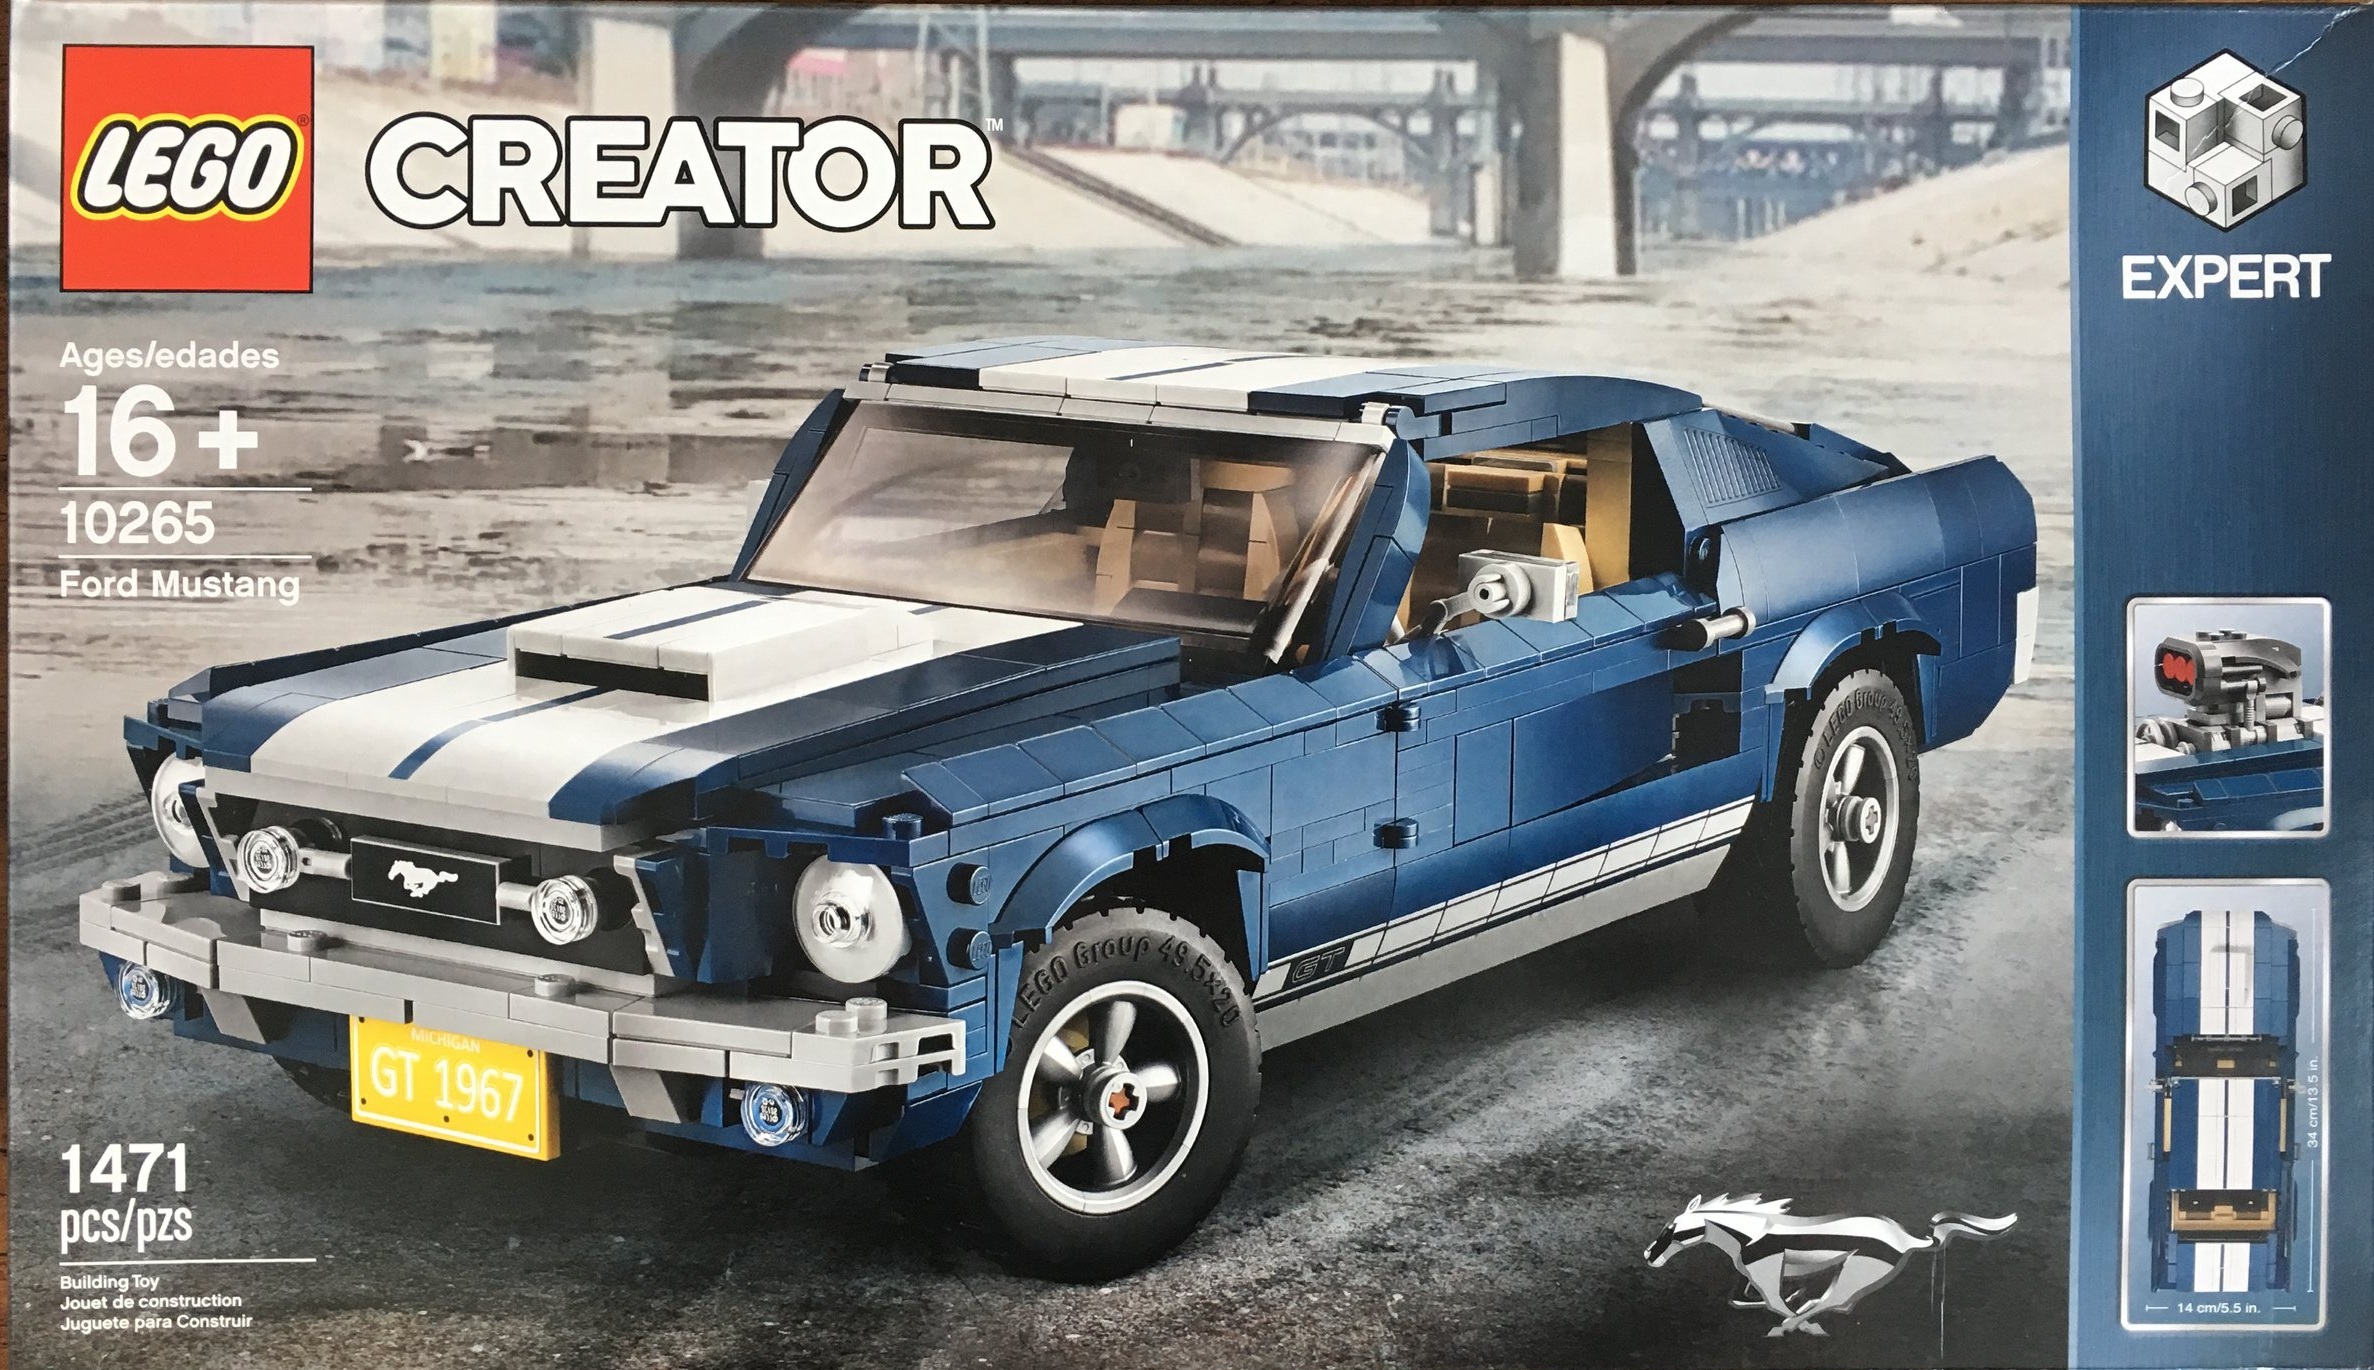 Set - #10265-1: Ford Mustang Creator Expert — for Bricks